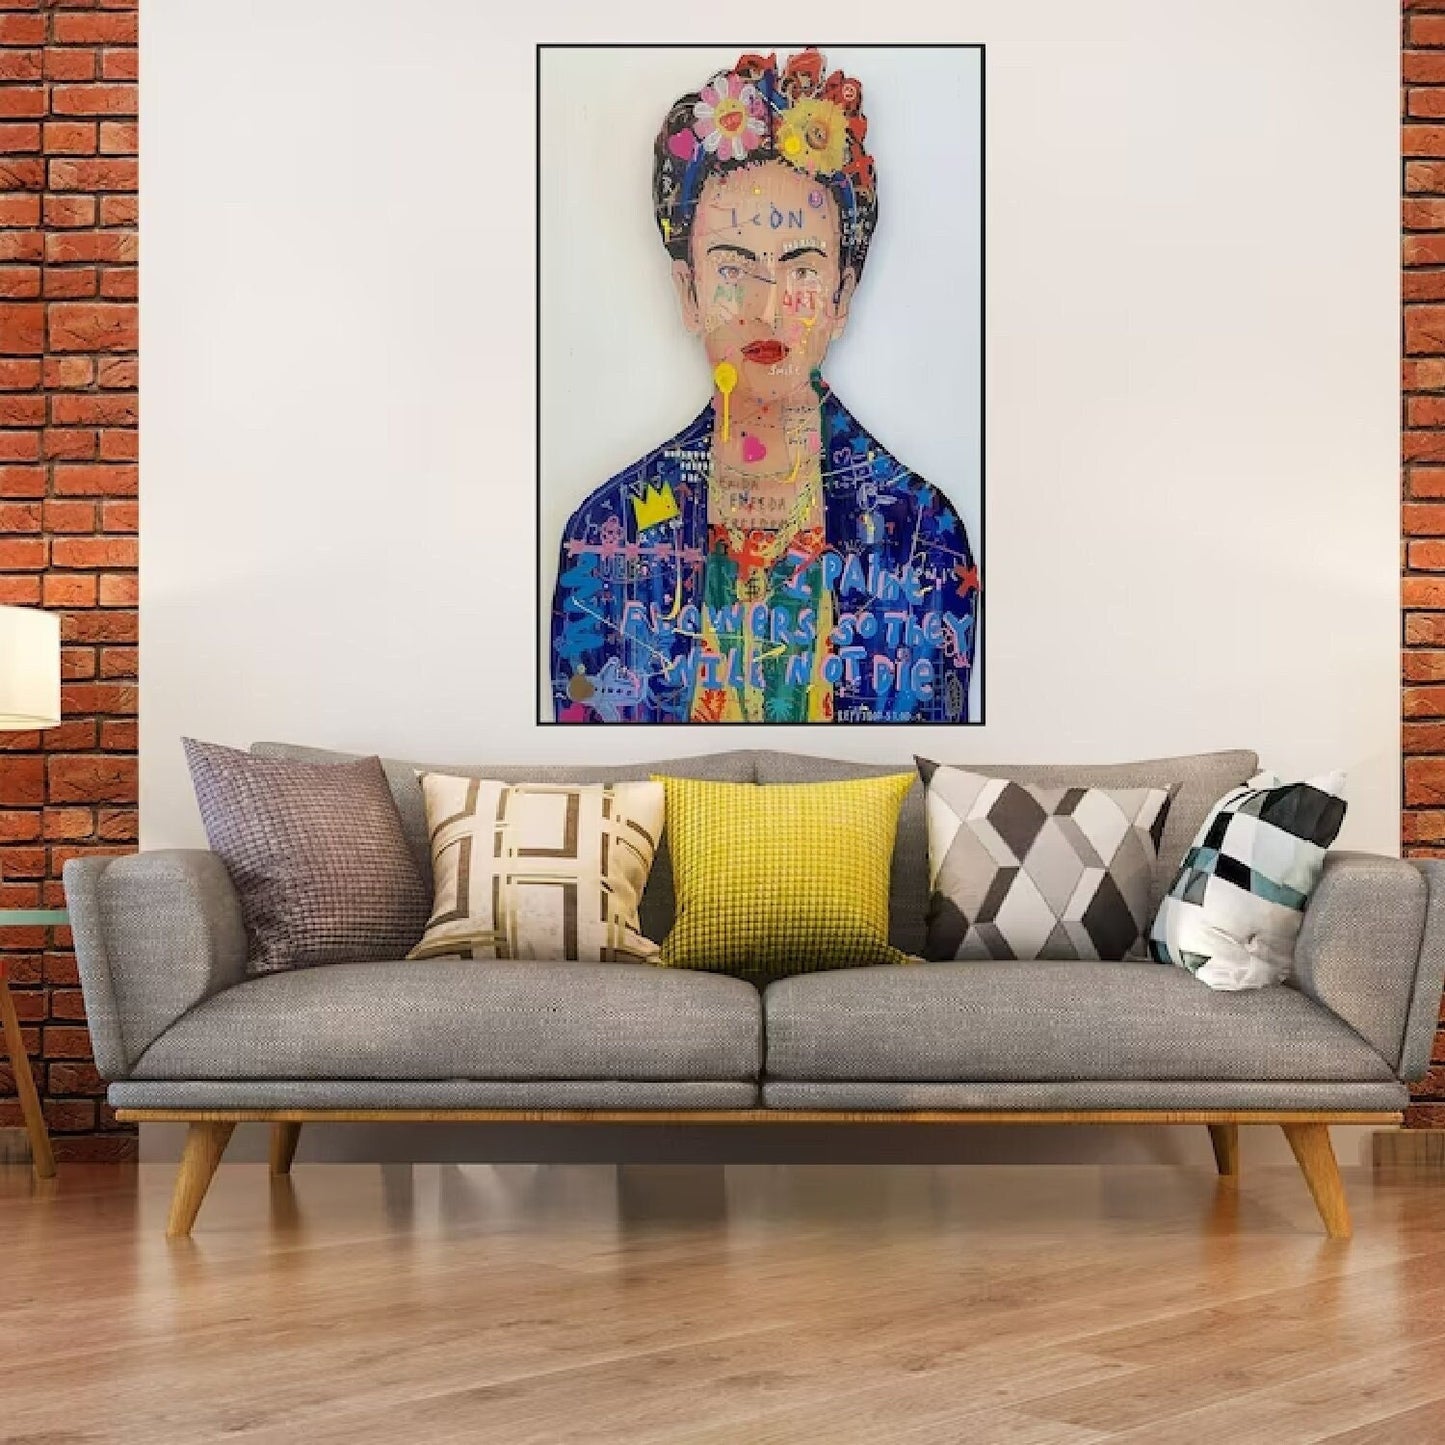 Frida Kahlo 100% Hand Painted Acrylic Wall Pop Art